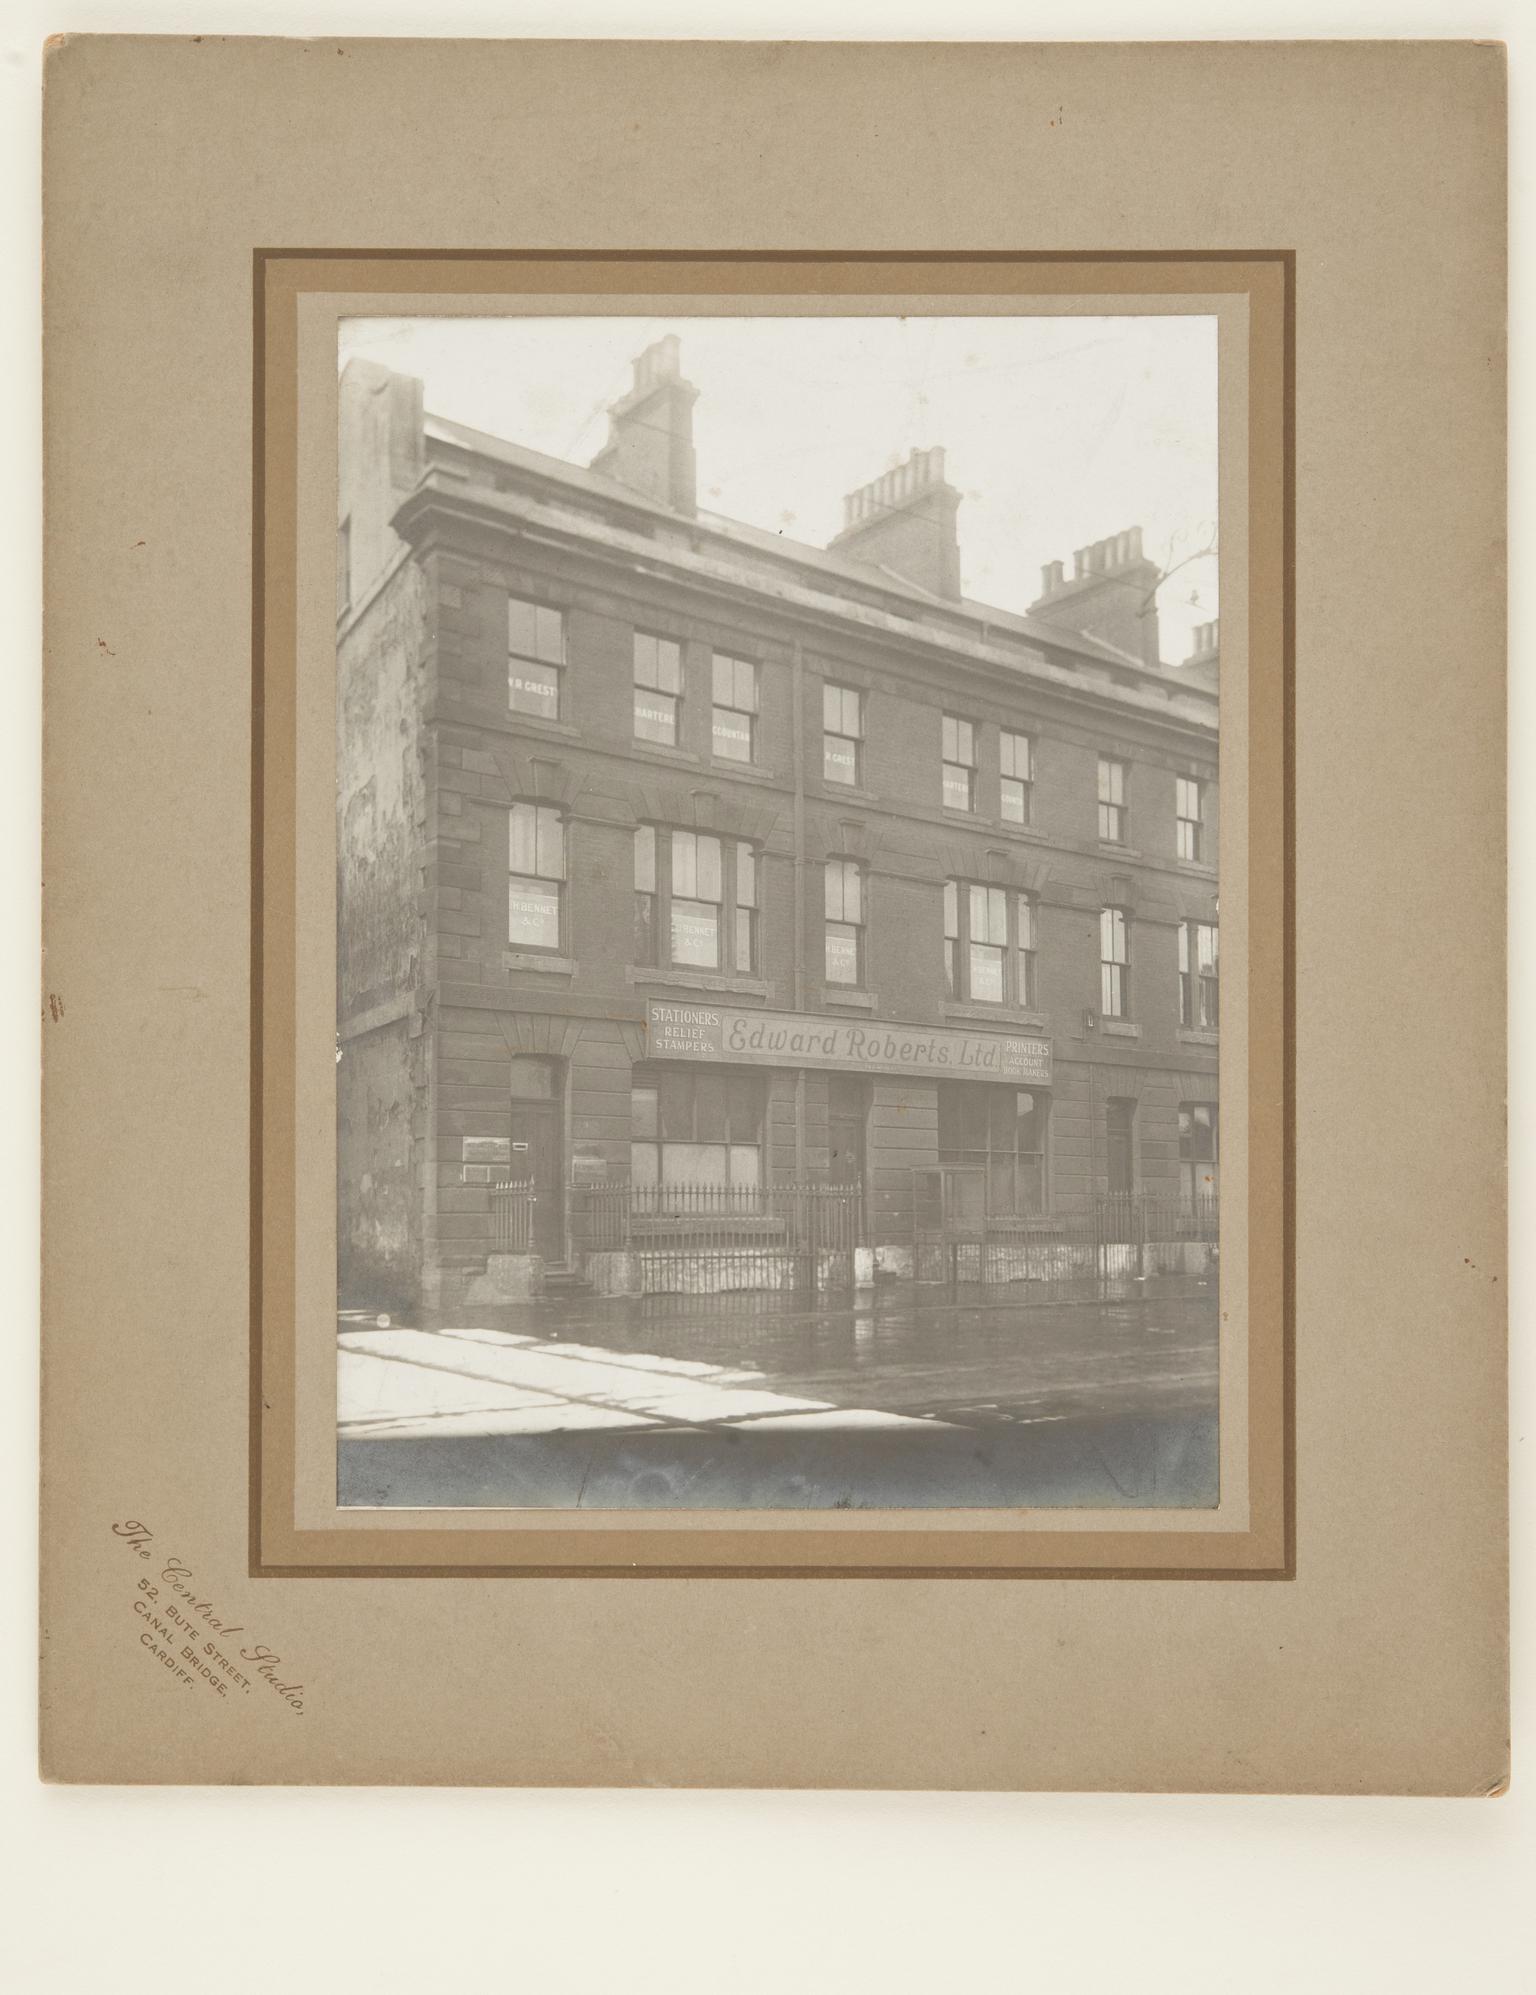 Edward Roberts Ltd., photograph